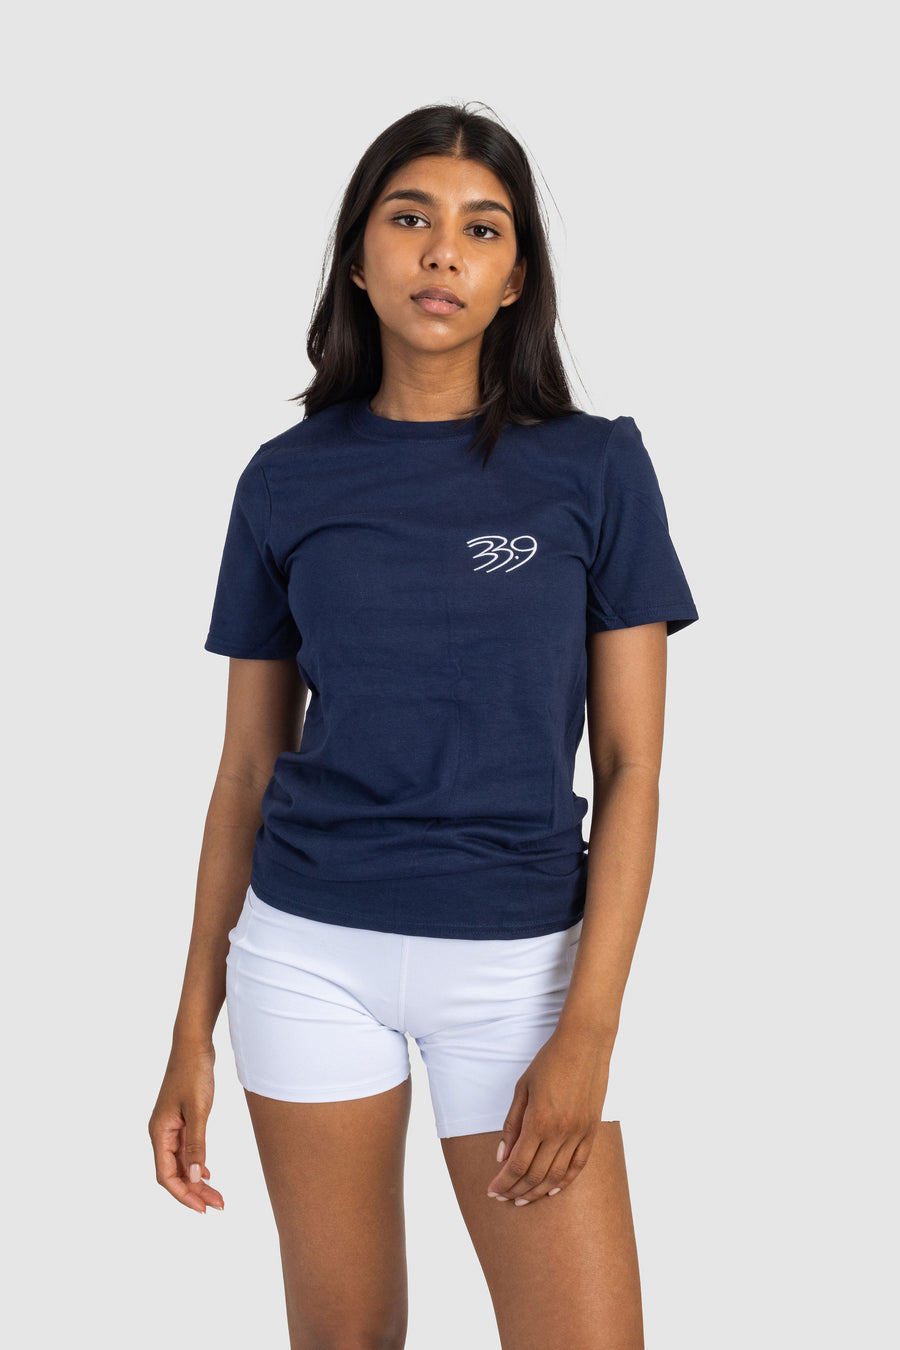 Girls Navy 33.9 T-Shirt